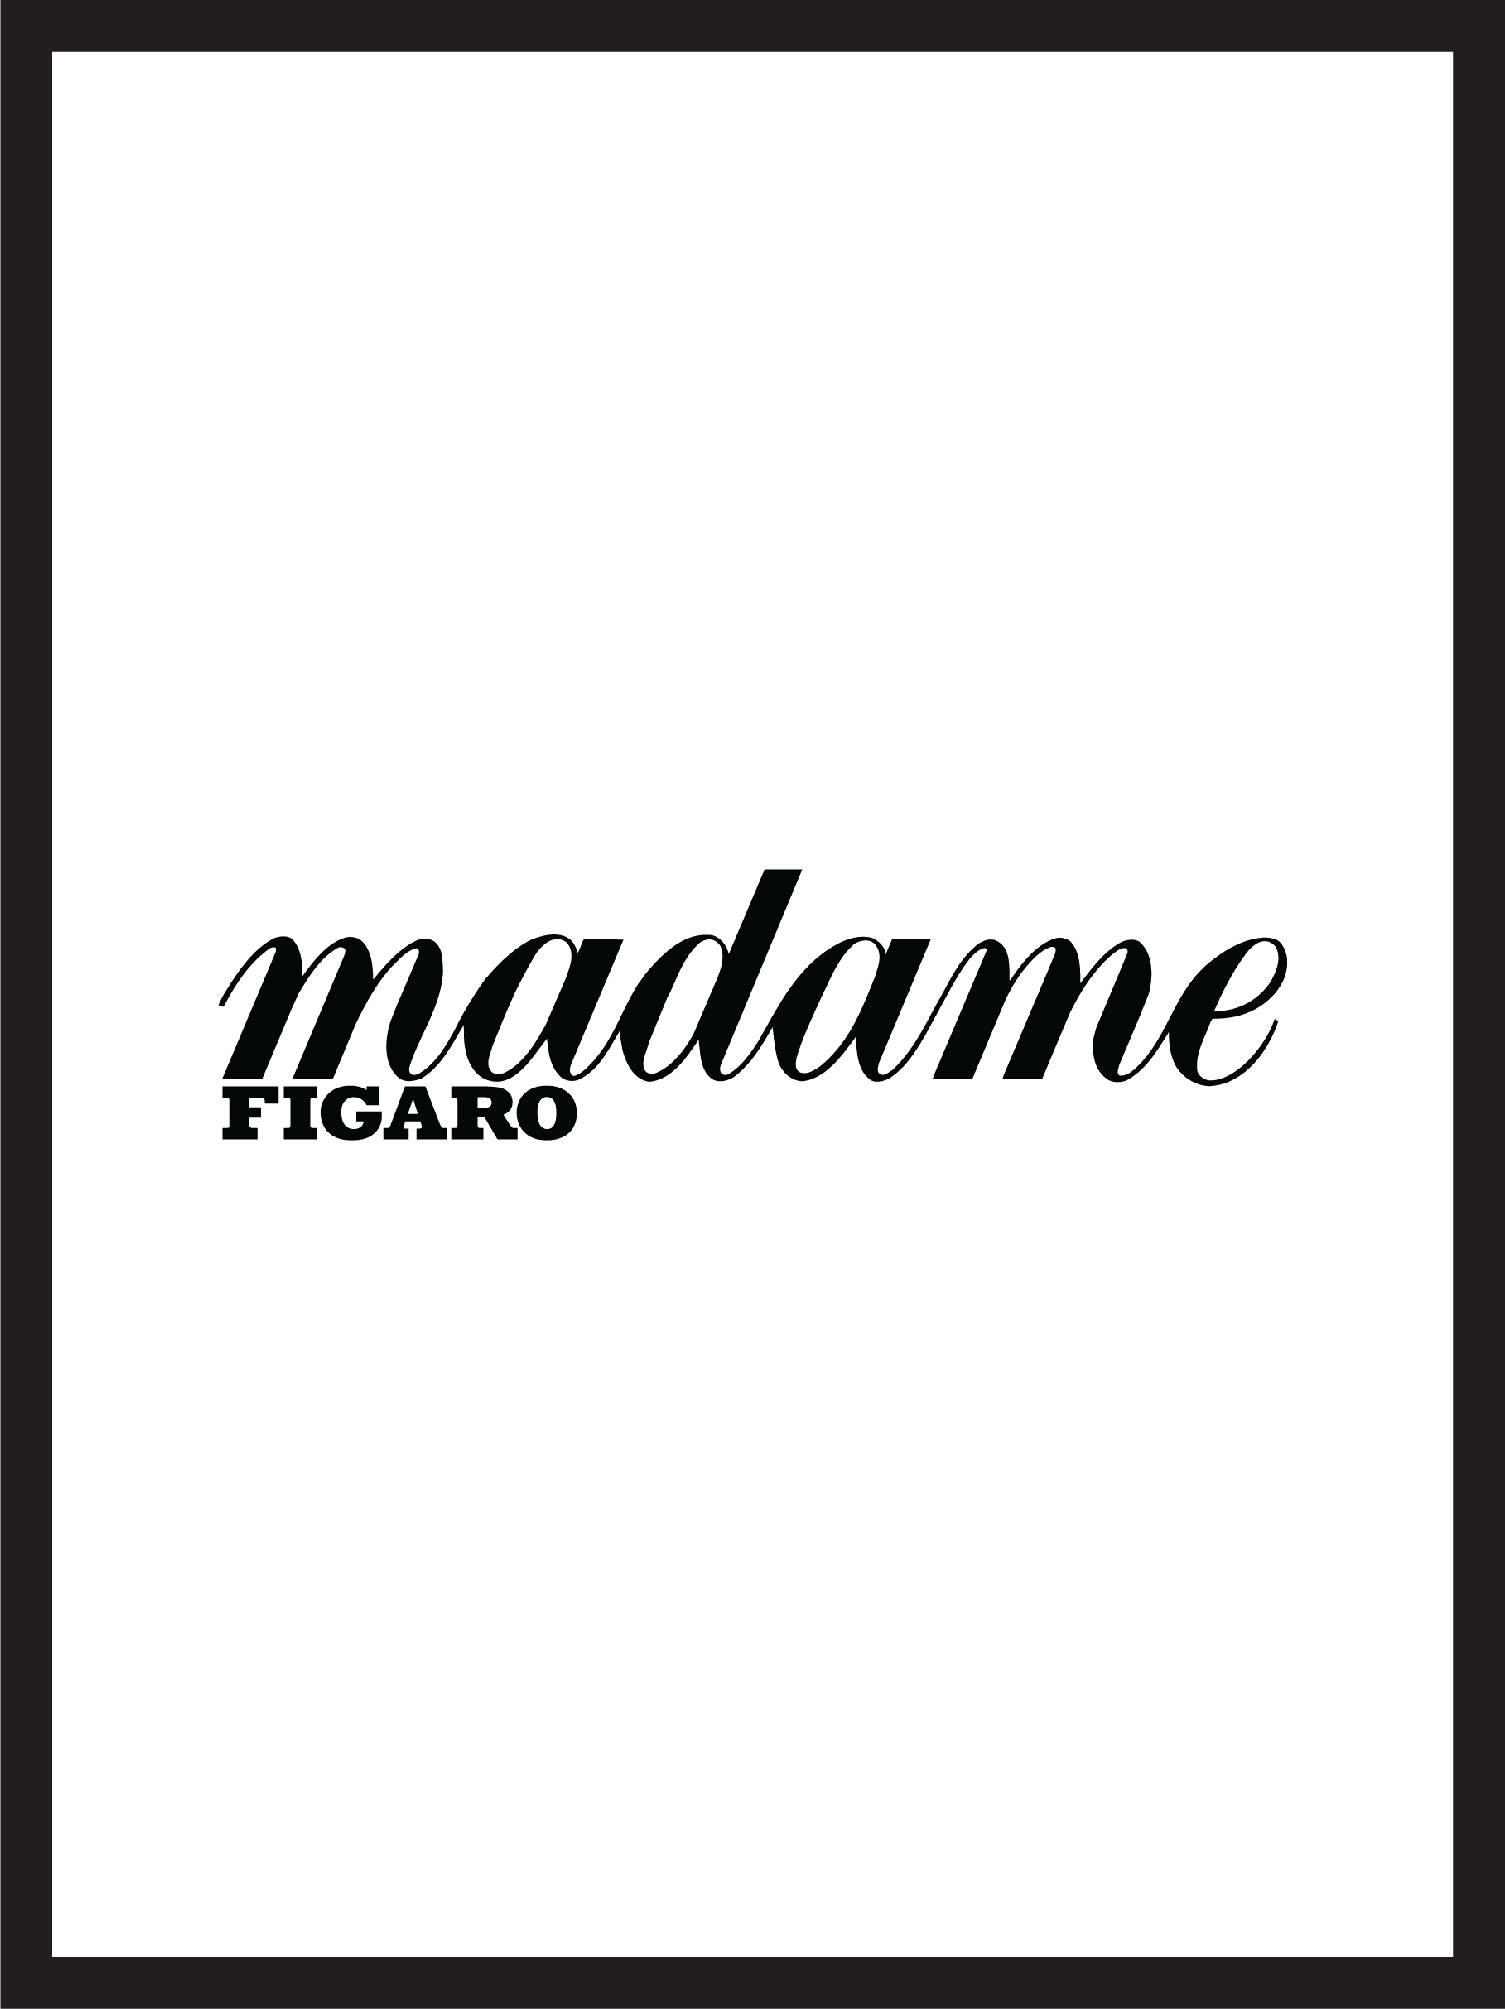 couverture et logo figaro madame